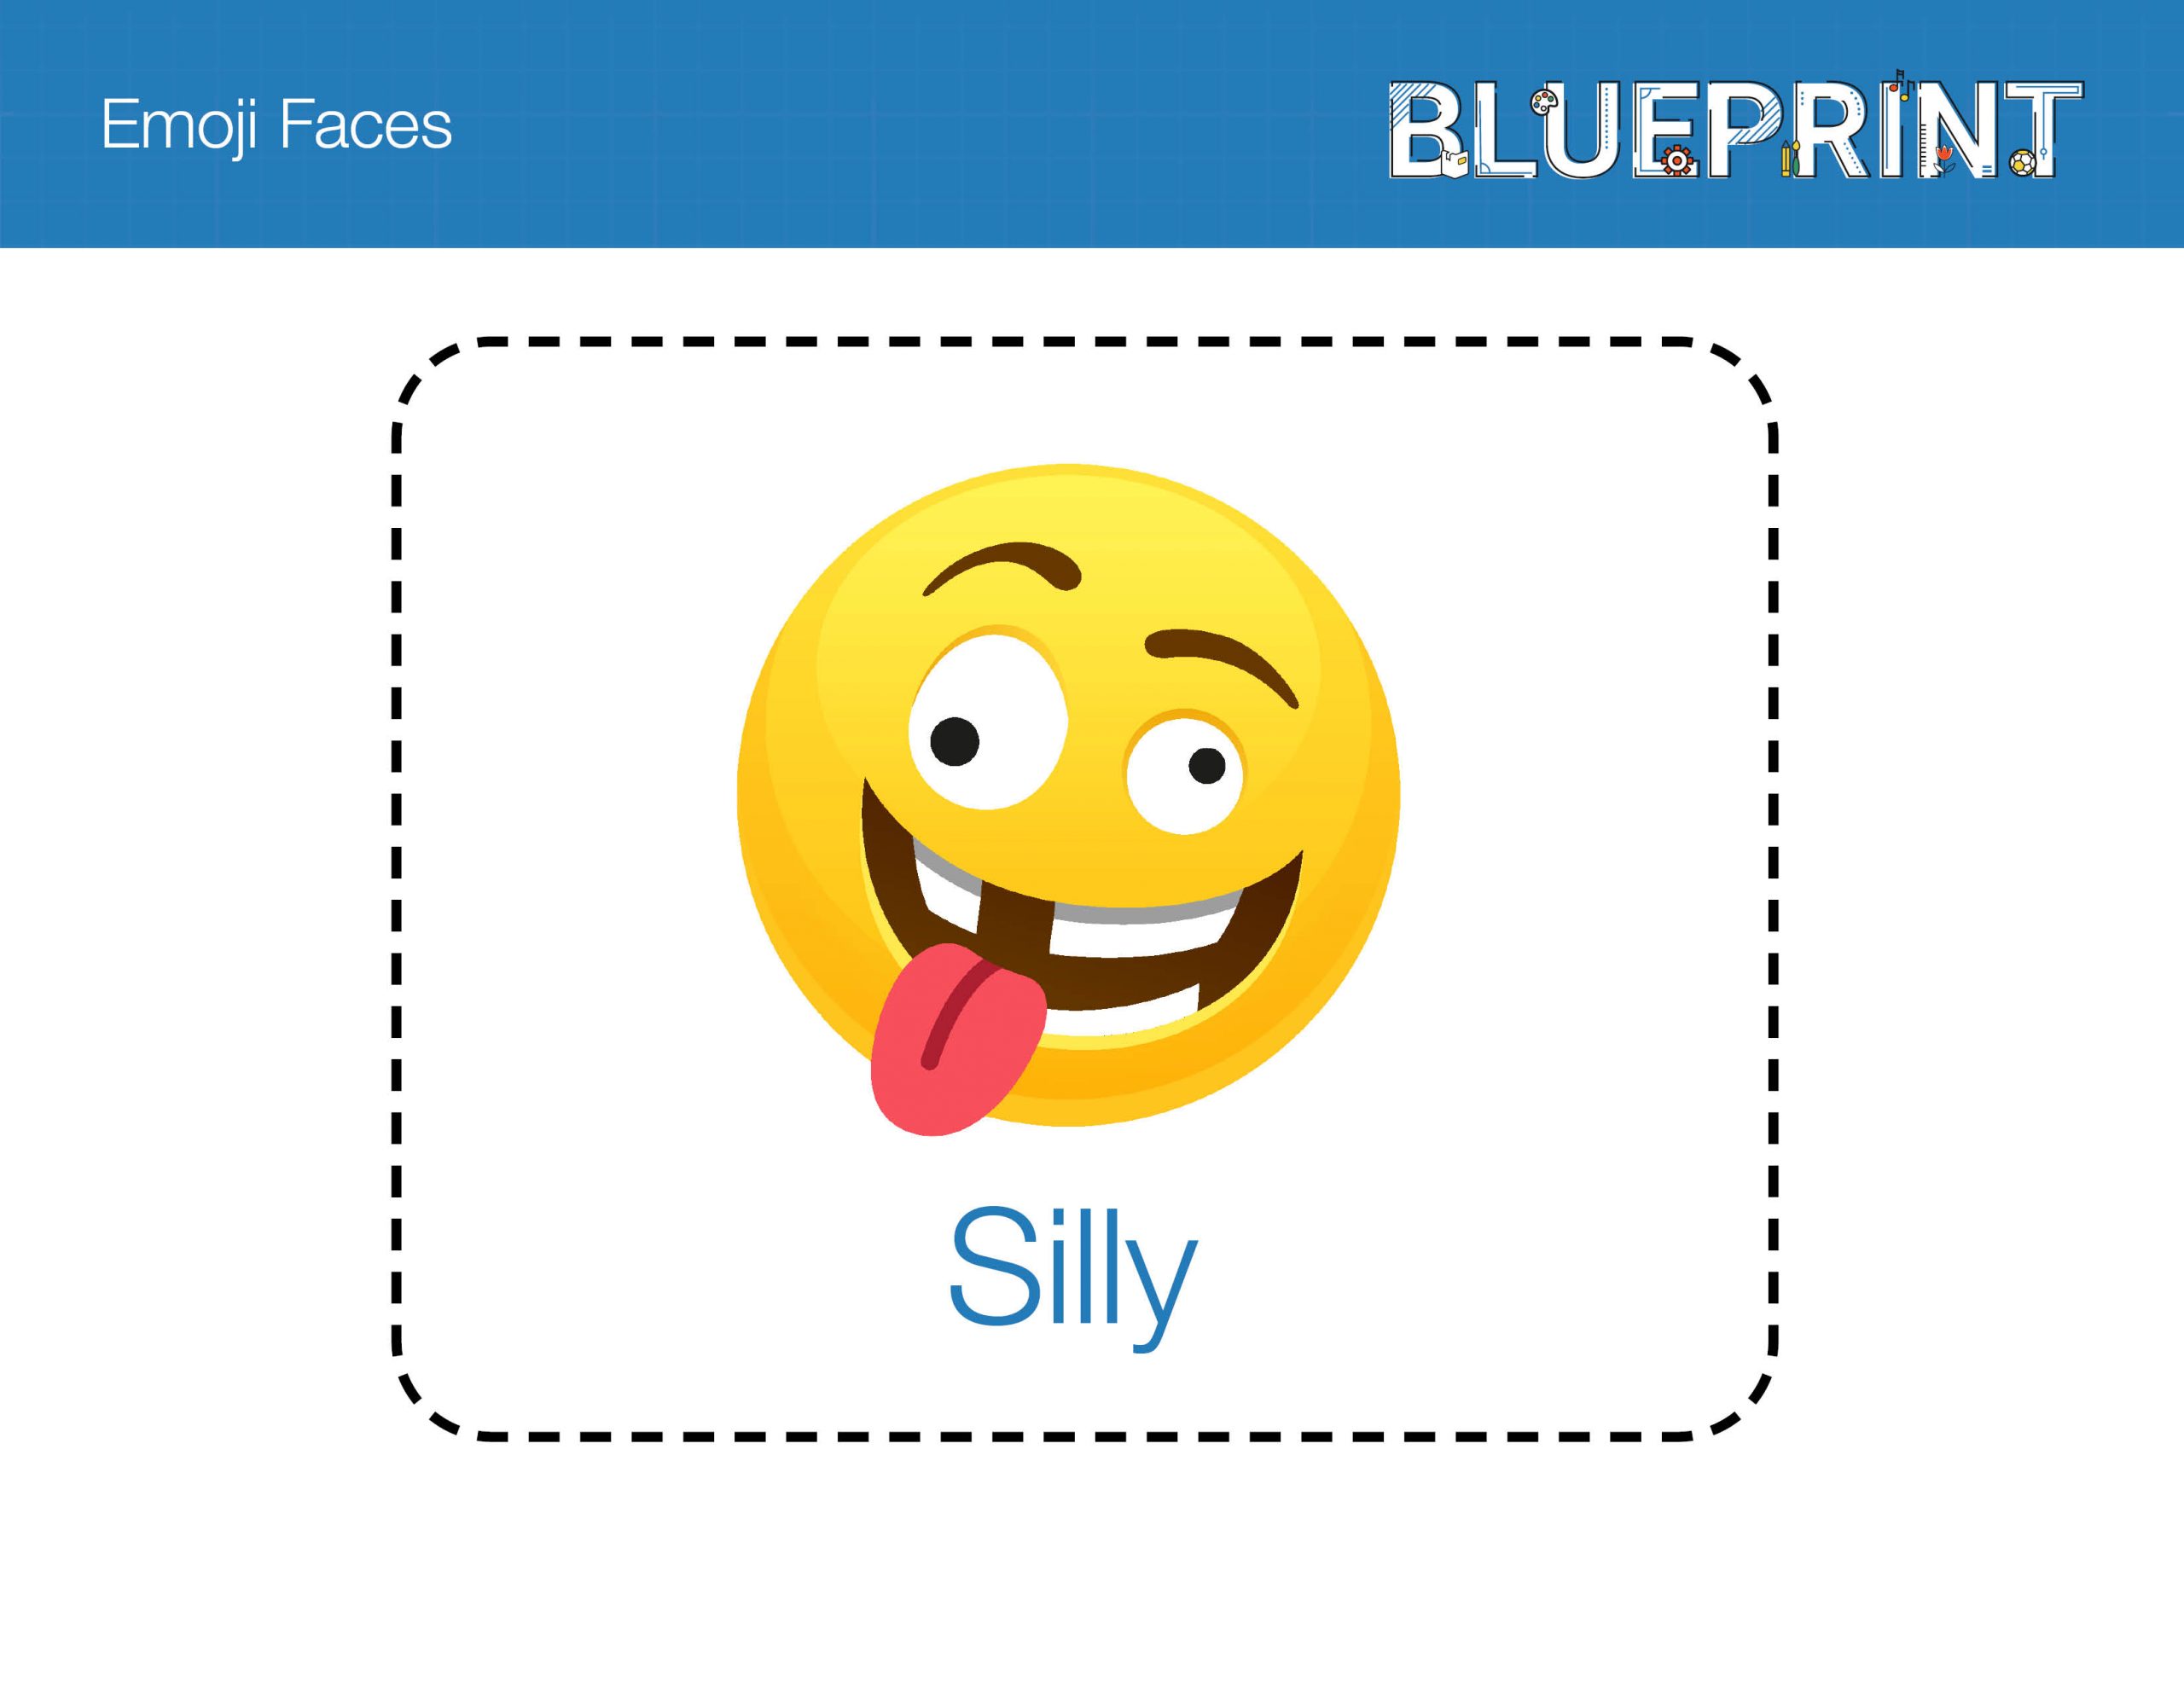 Emoji Faces - Silly